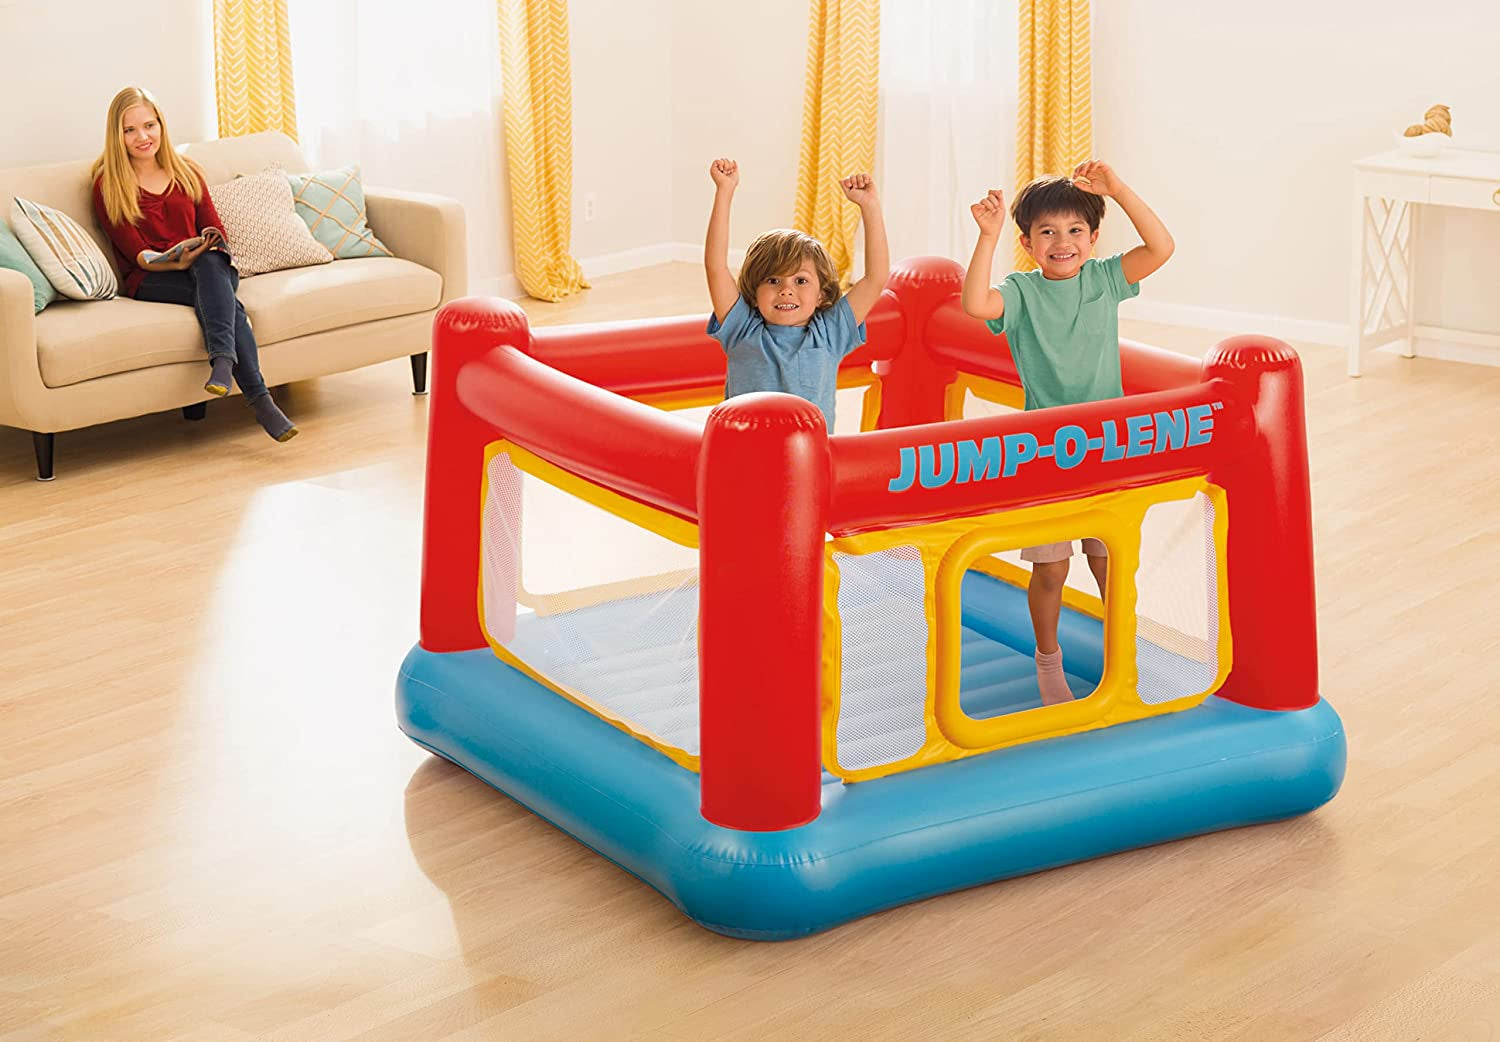 Intex Inflatable Jump-O-Lene Playhouse Trampoline - Kids' Bounce House